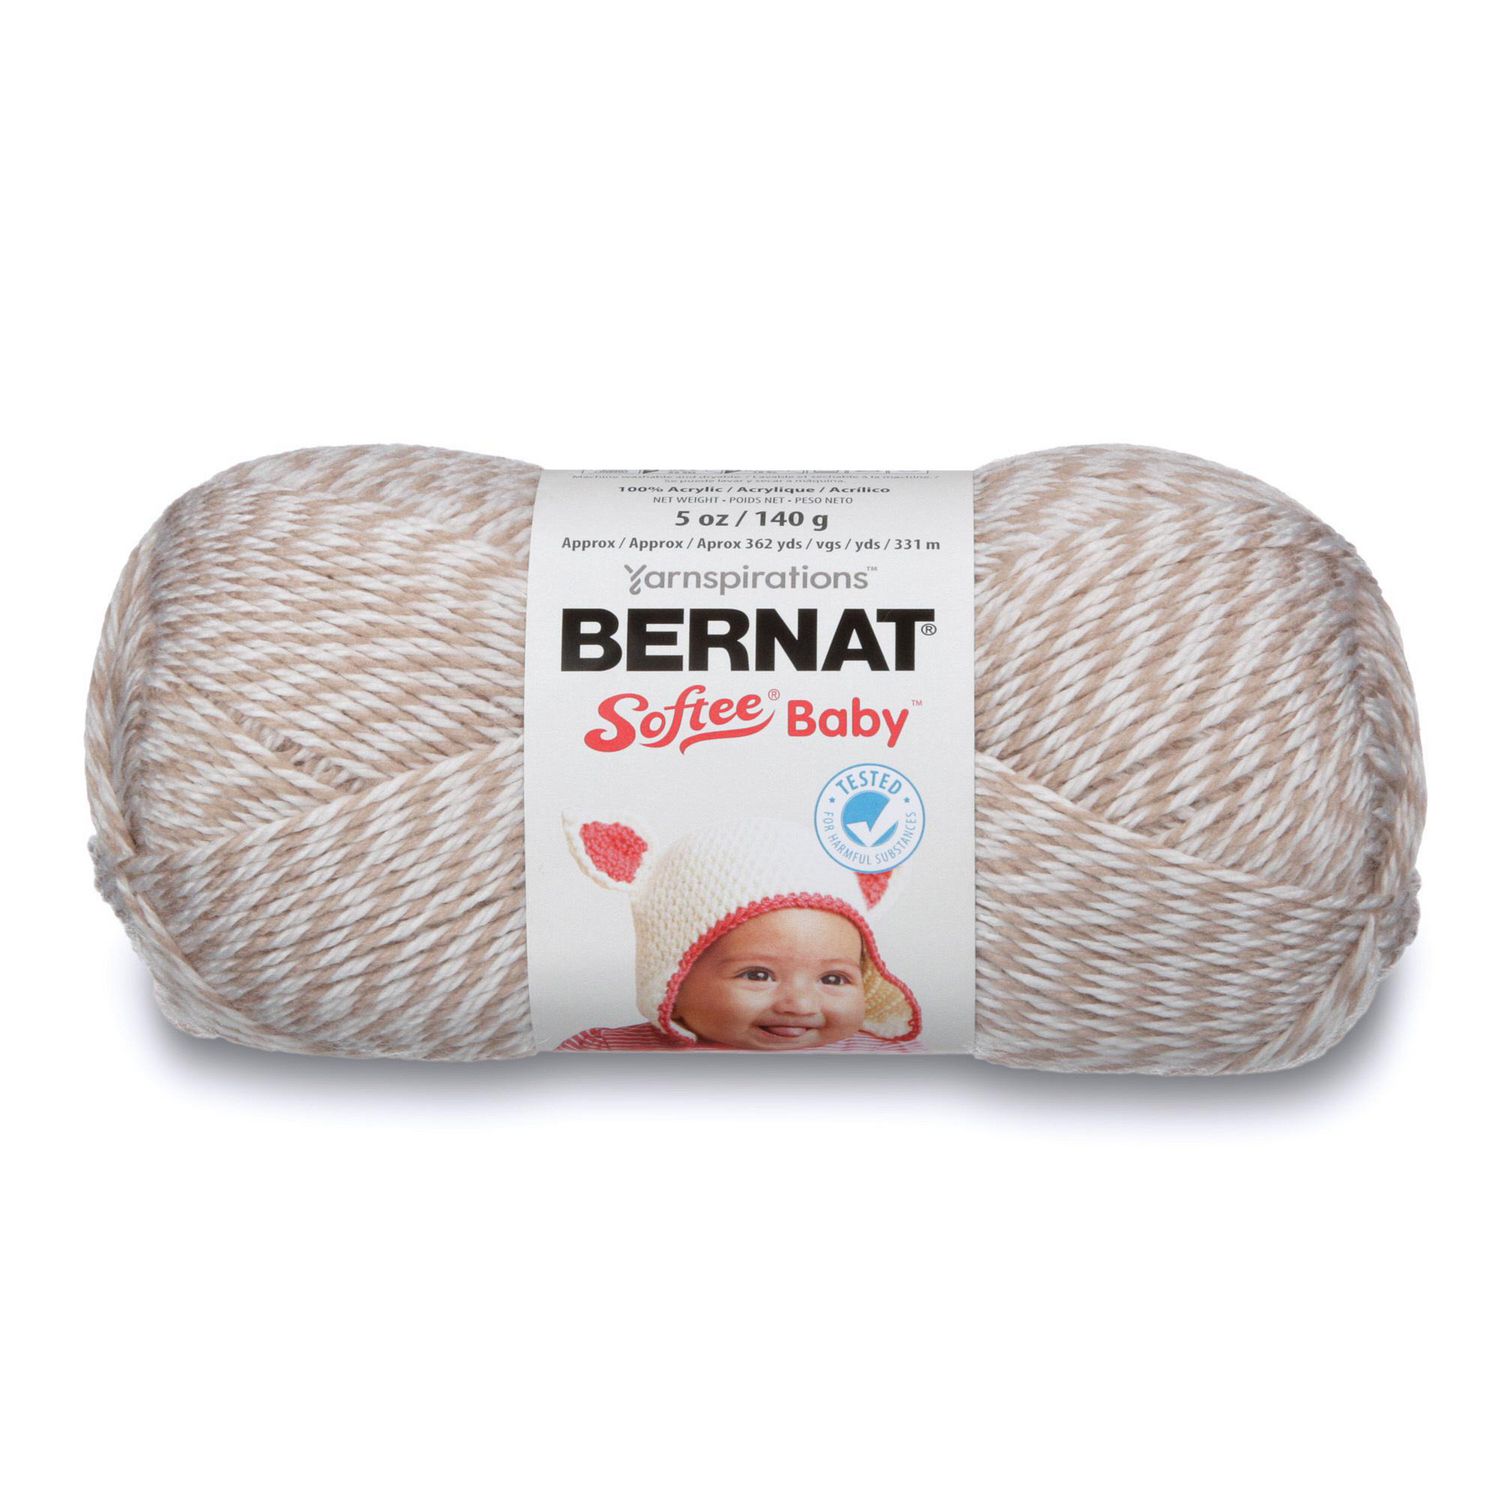 BERNAT SOFTEE BABY YARN (120G/4.25OZ), LITTLE MOUSE MARL | Walmart Canada